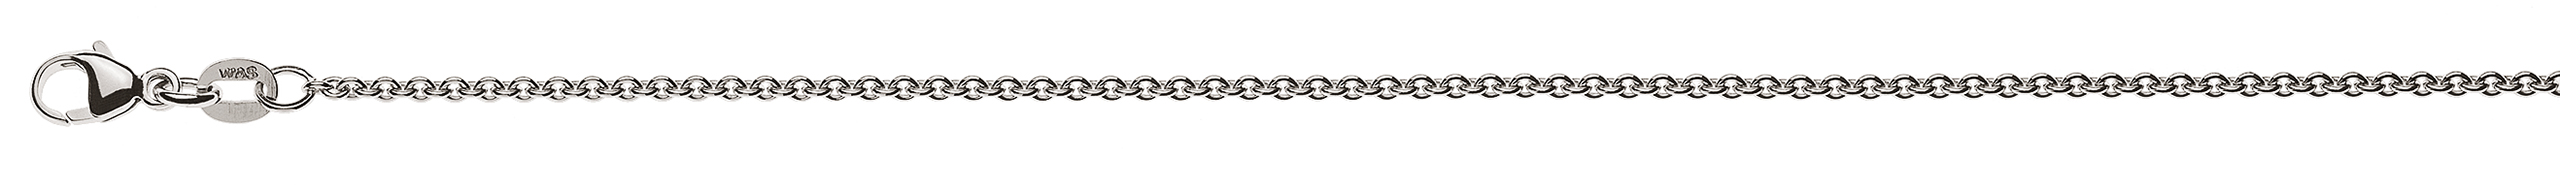 AURONOS Style Necklace White Gold 9K Round Anchor 38cm 1.7mm